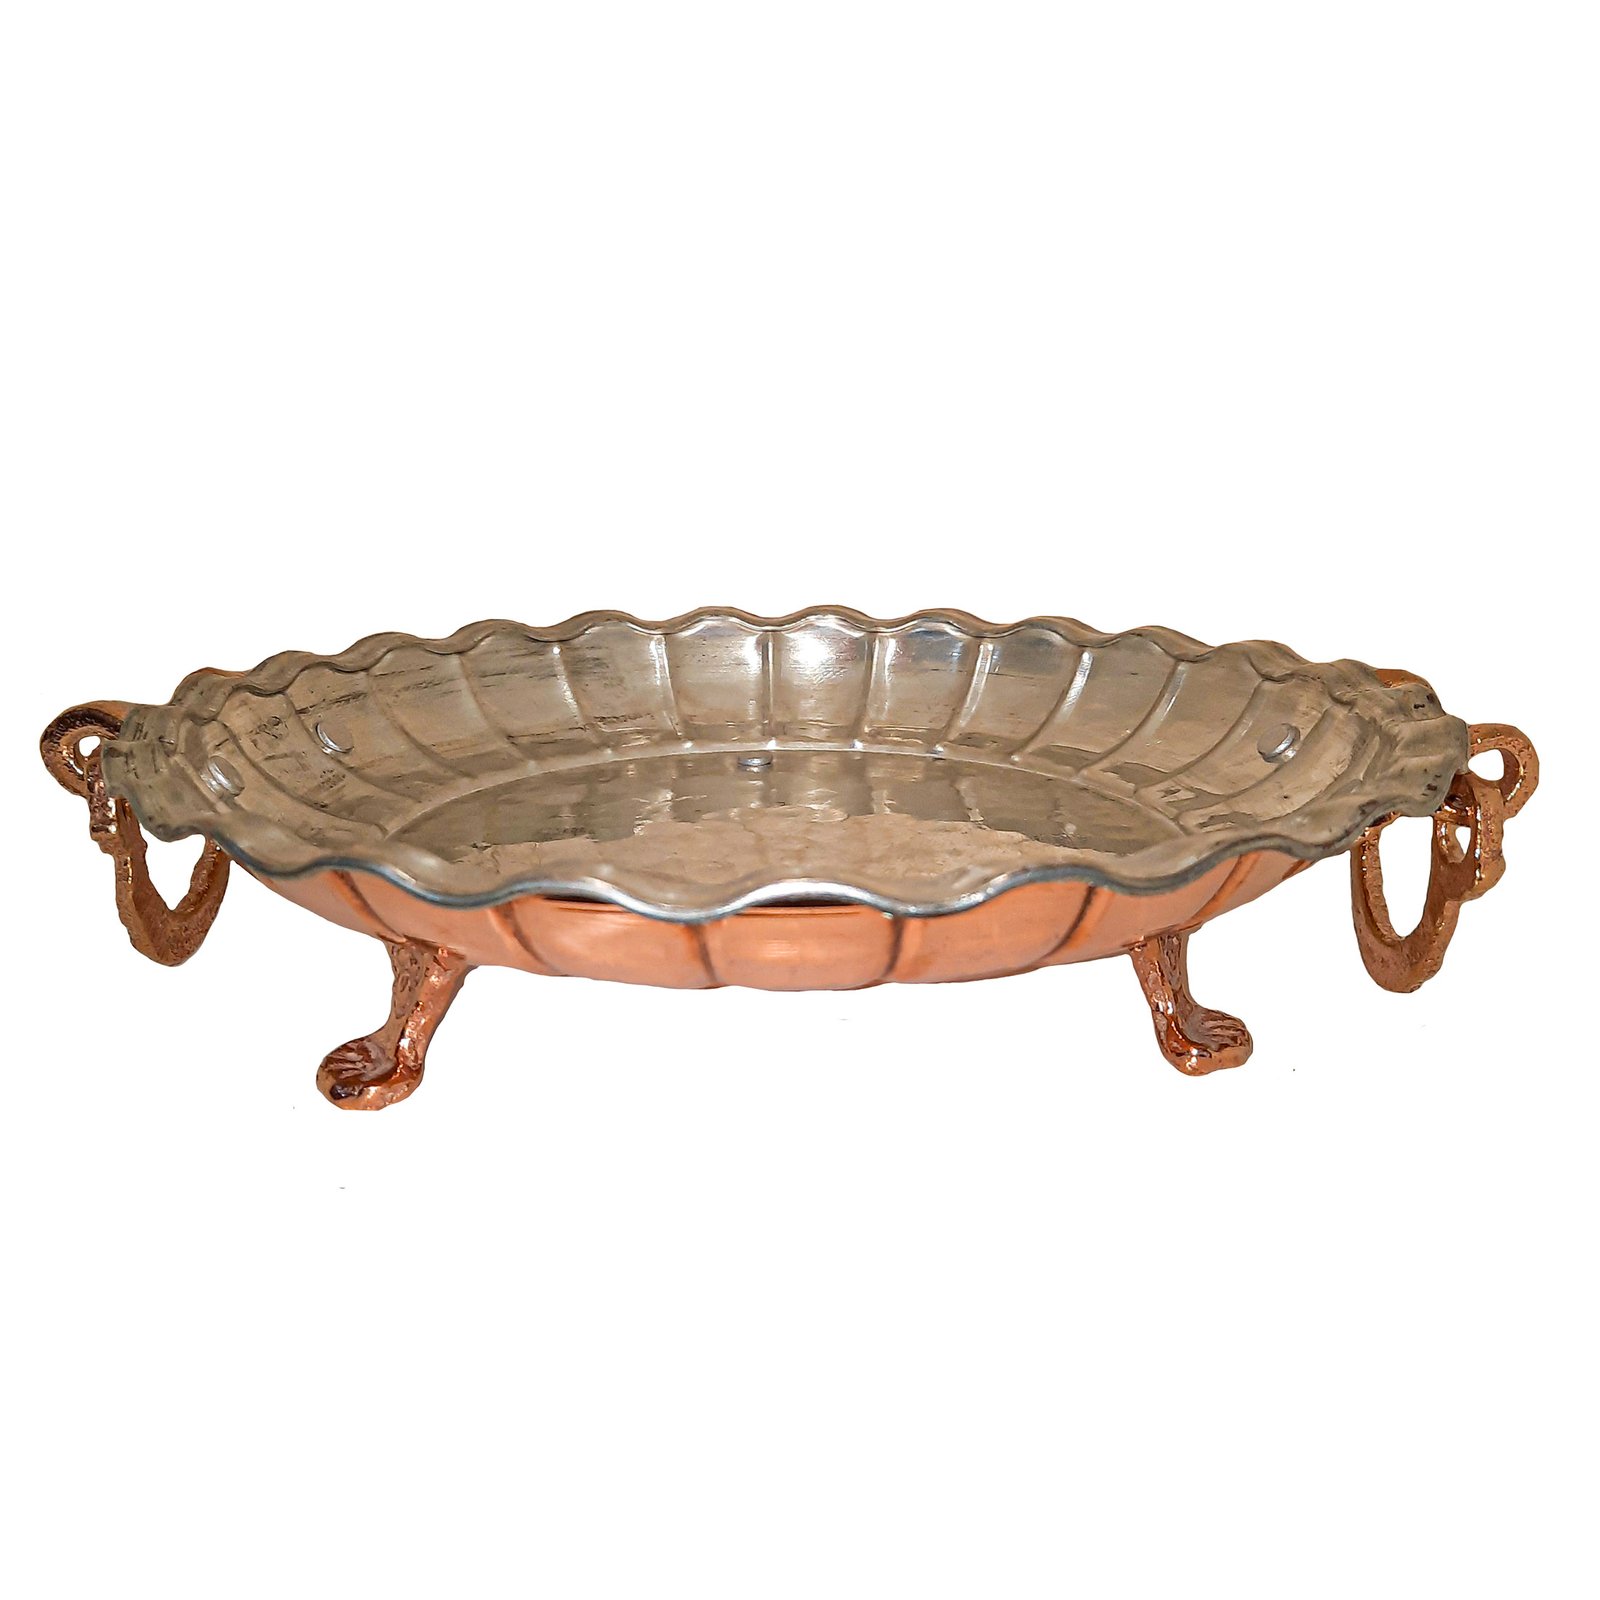 Handicraft Copper tray payehdar model code M_145, изделия из меди, цена на изделия из меди